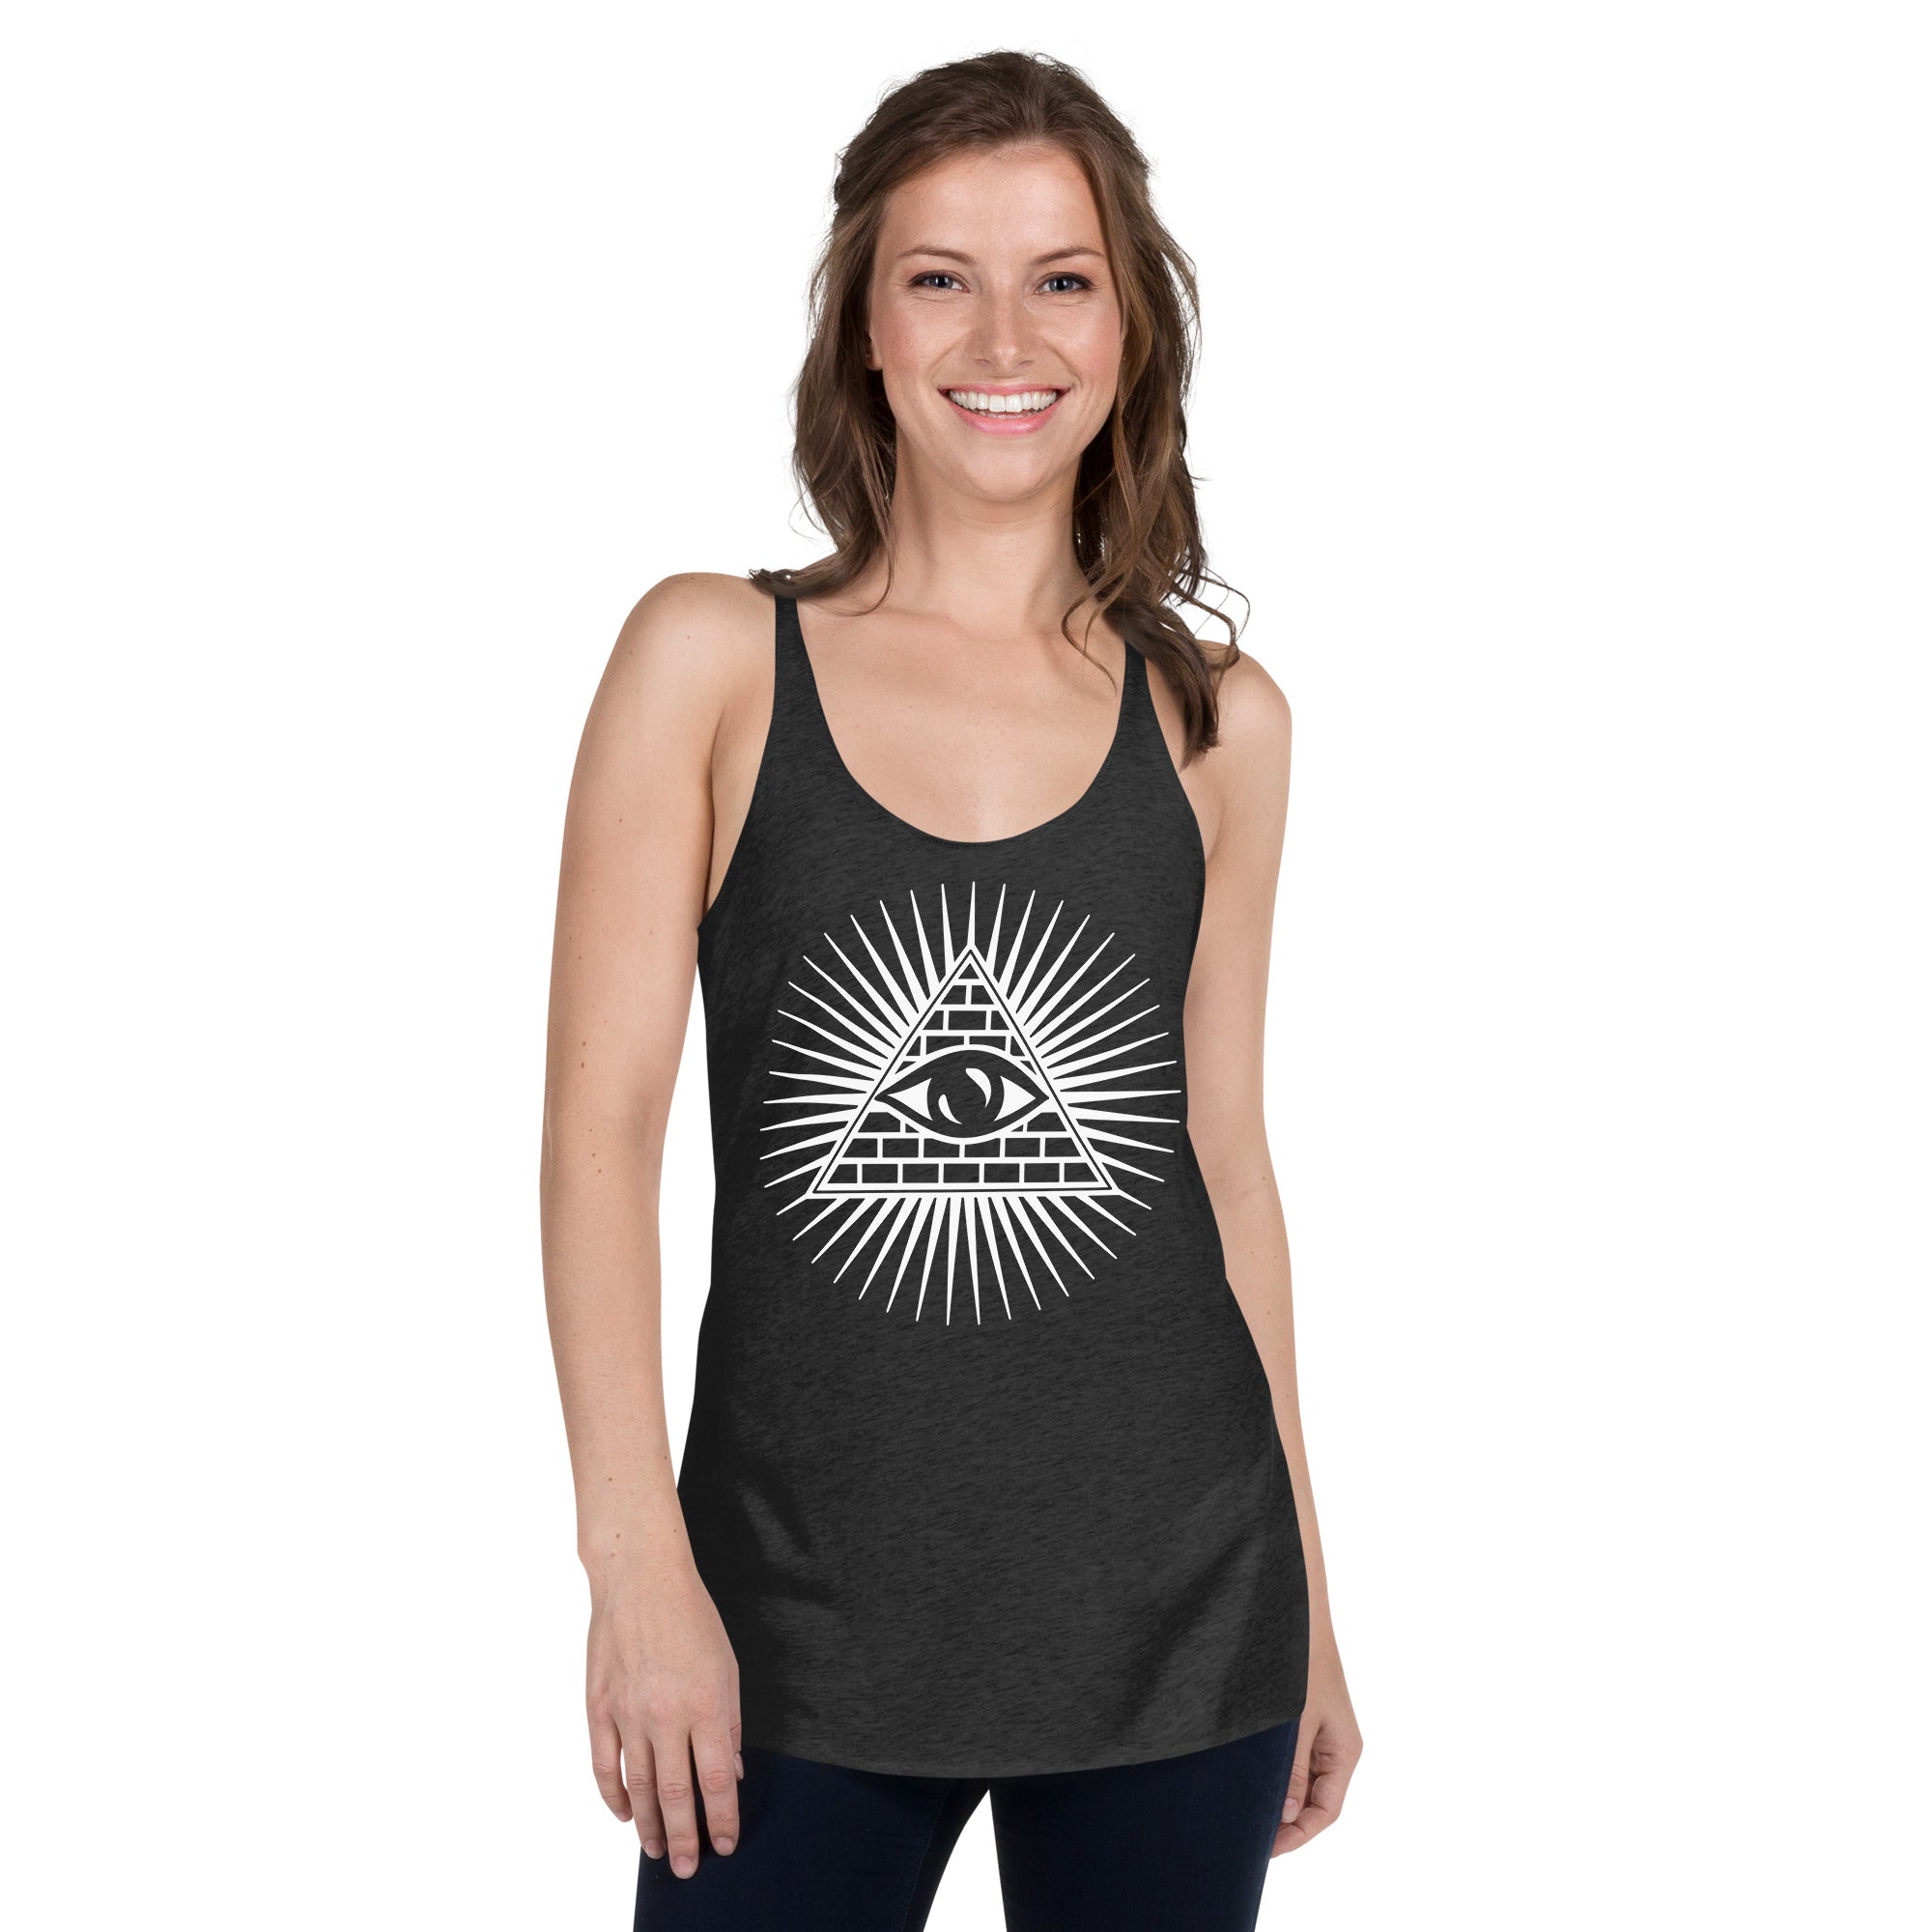 Illuminati All Seeing Psychic Eye Women's Racerback Tank Top Shirt - Edge of Life Designs